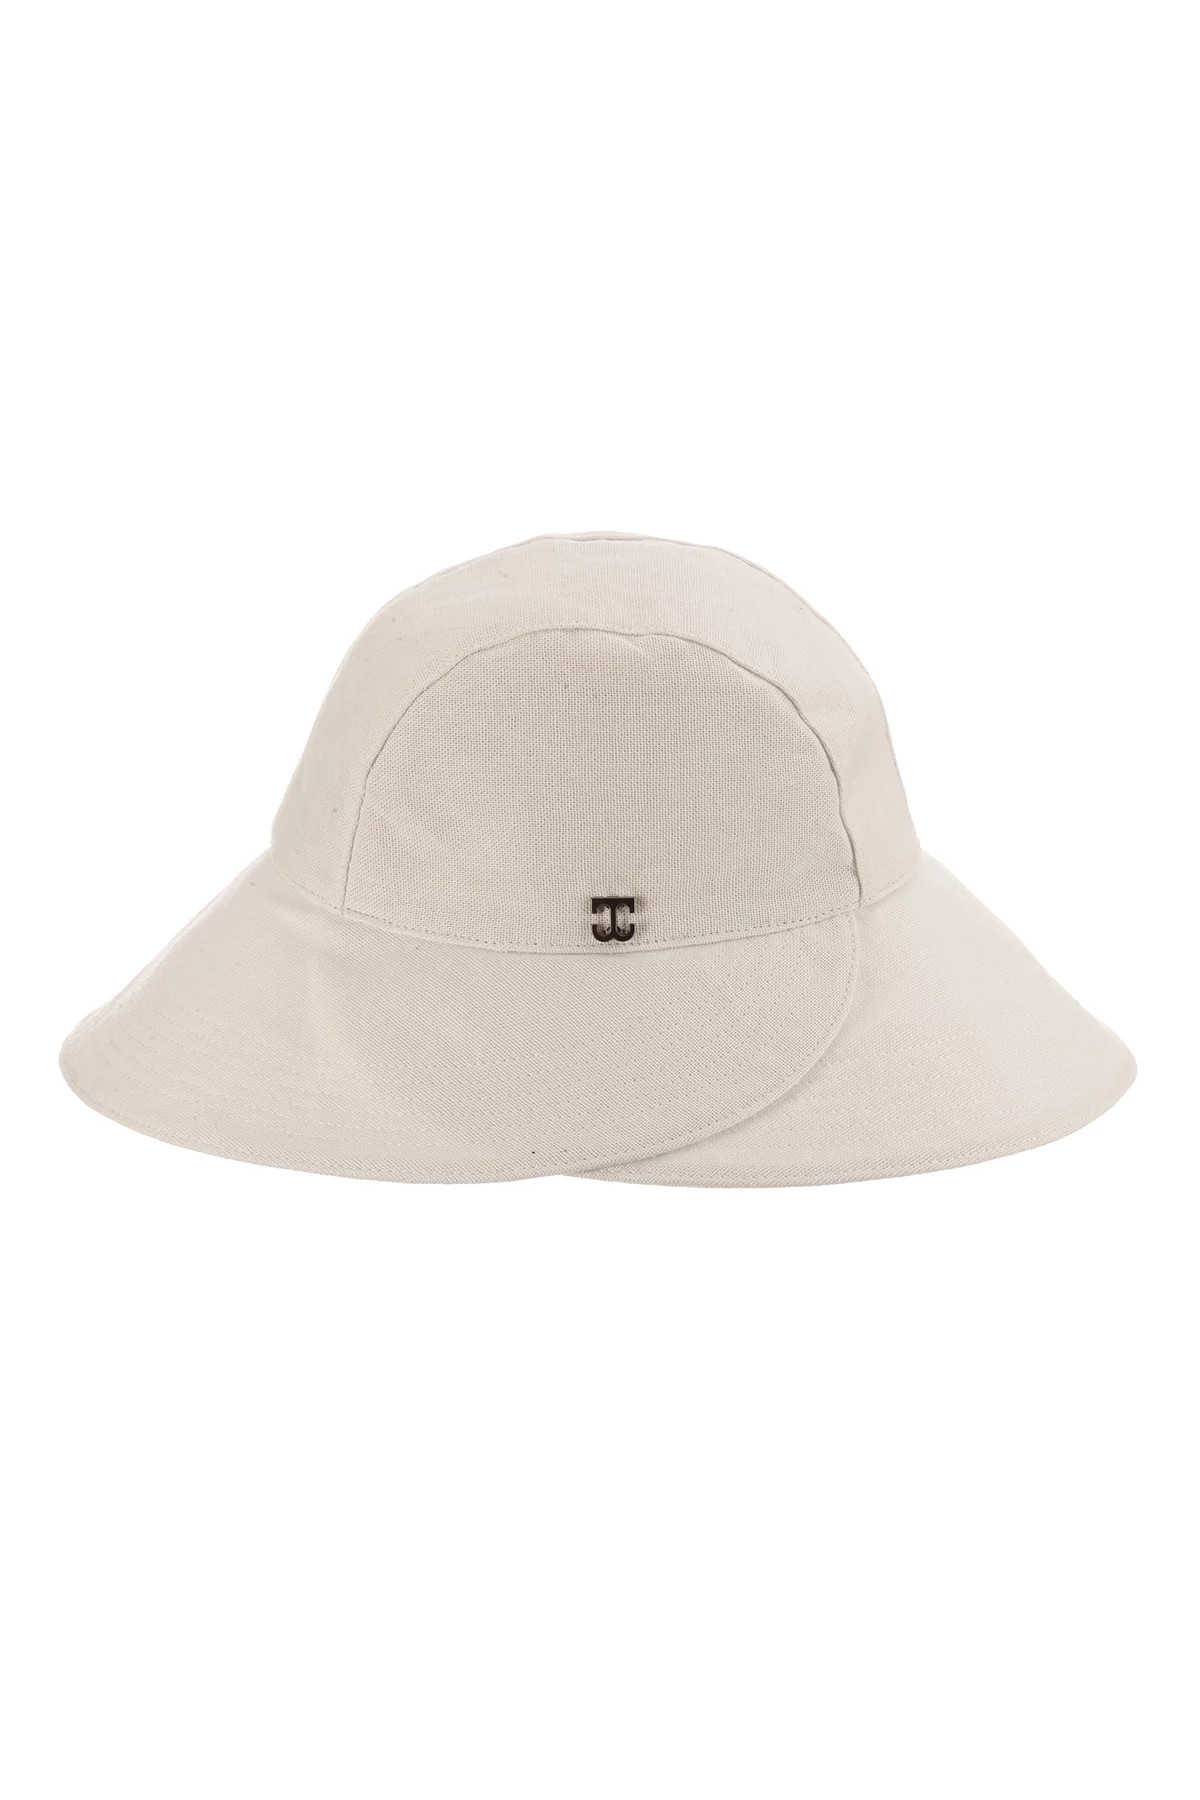 WHITE White Cotton Split Brim Sun Hat image number 3